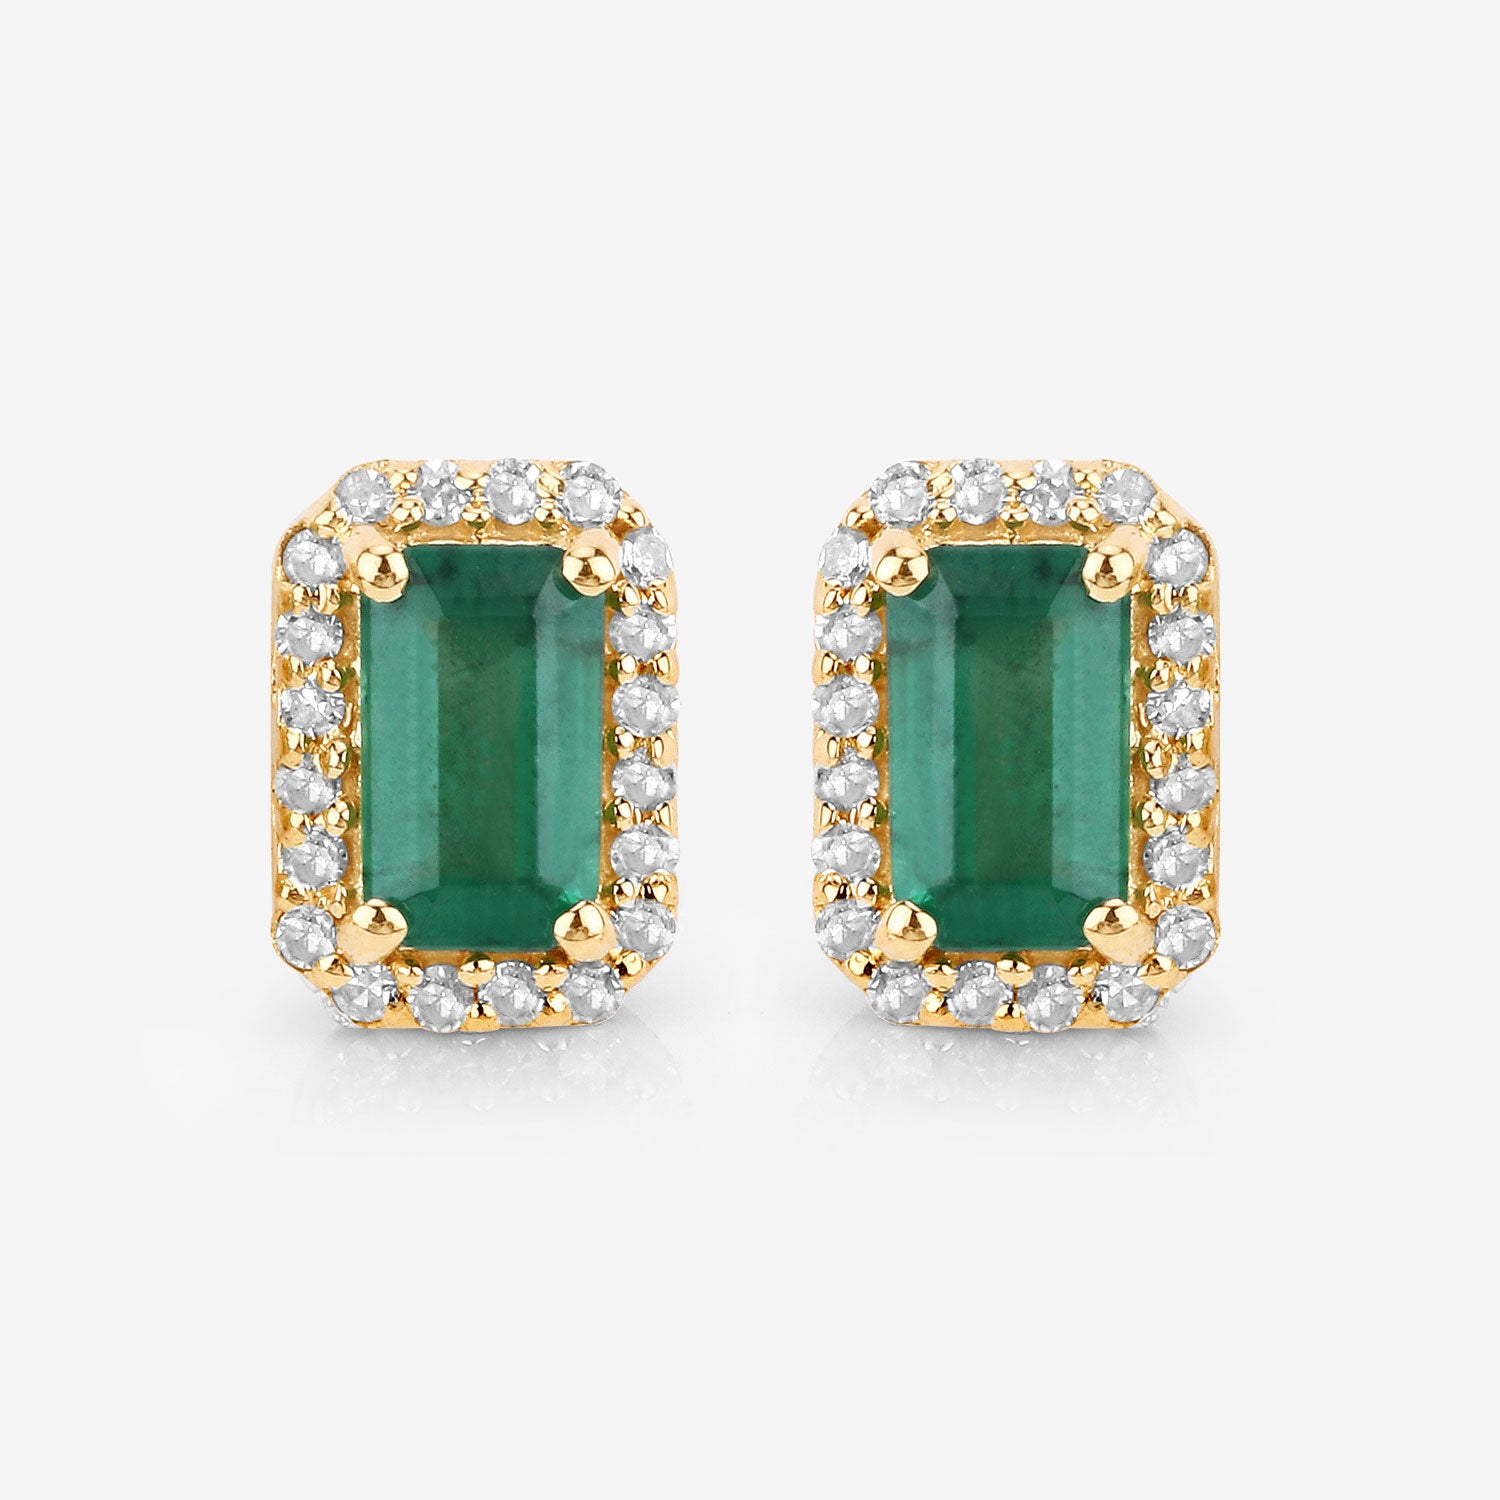 Genuine Zambian Emerald & White Diamond 14K Earrings